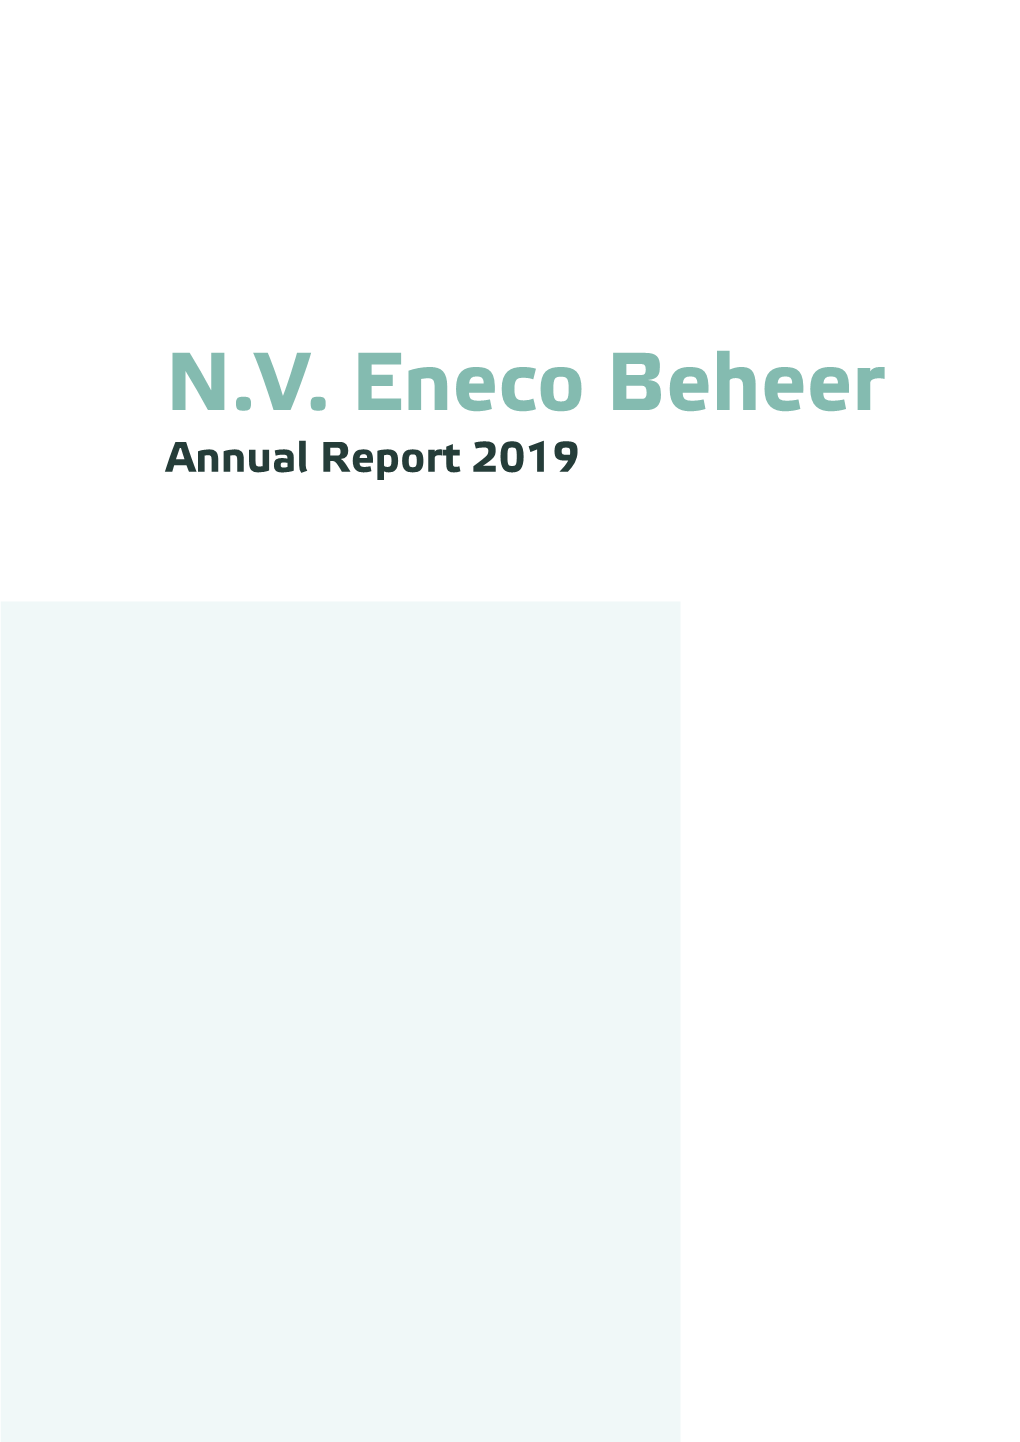 N.V. Eneco Beheer Annual Report 2019